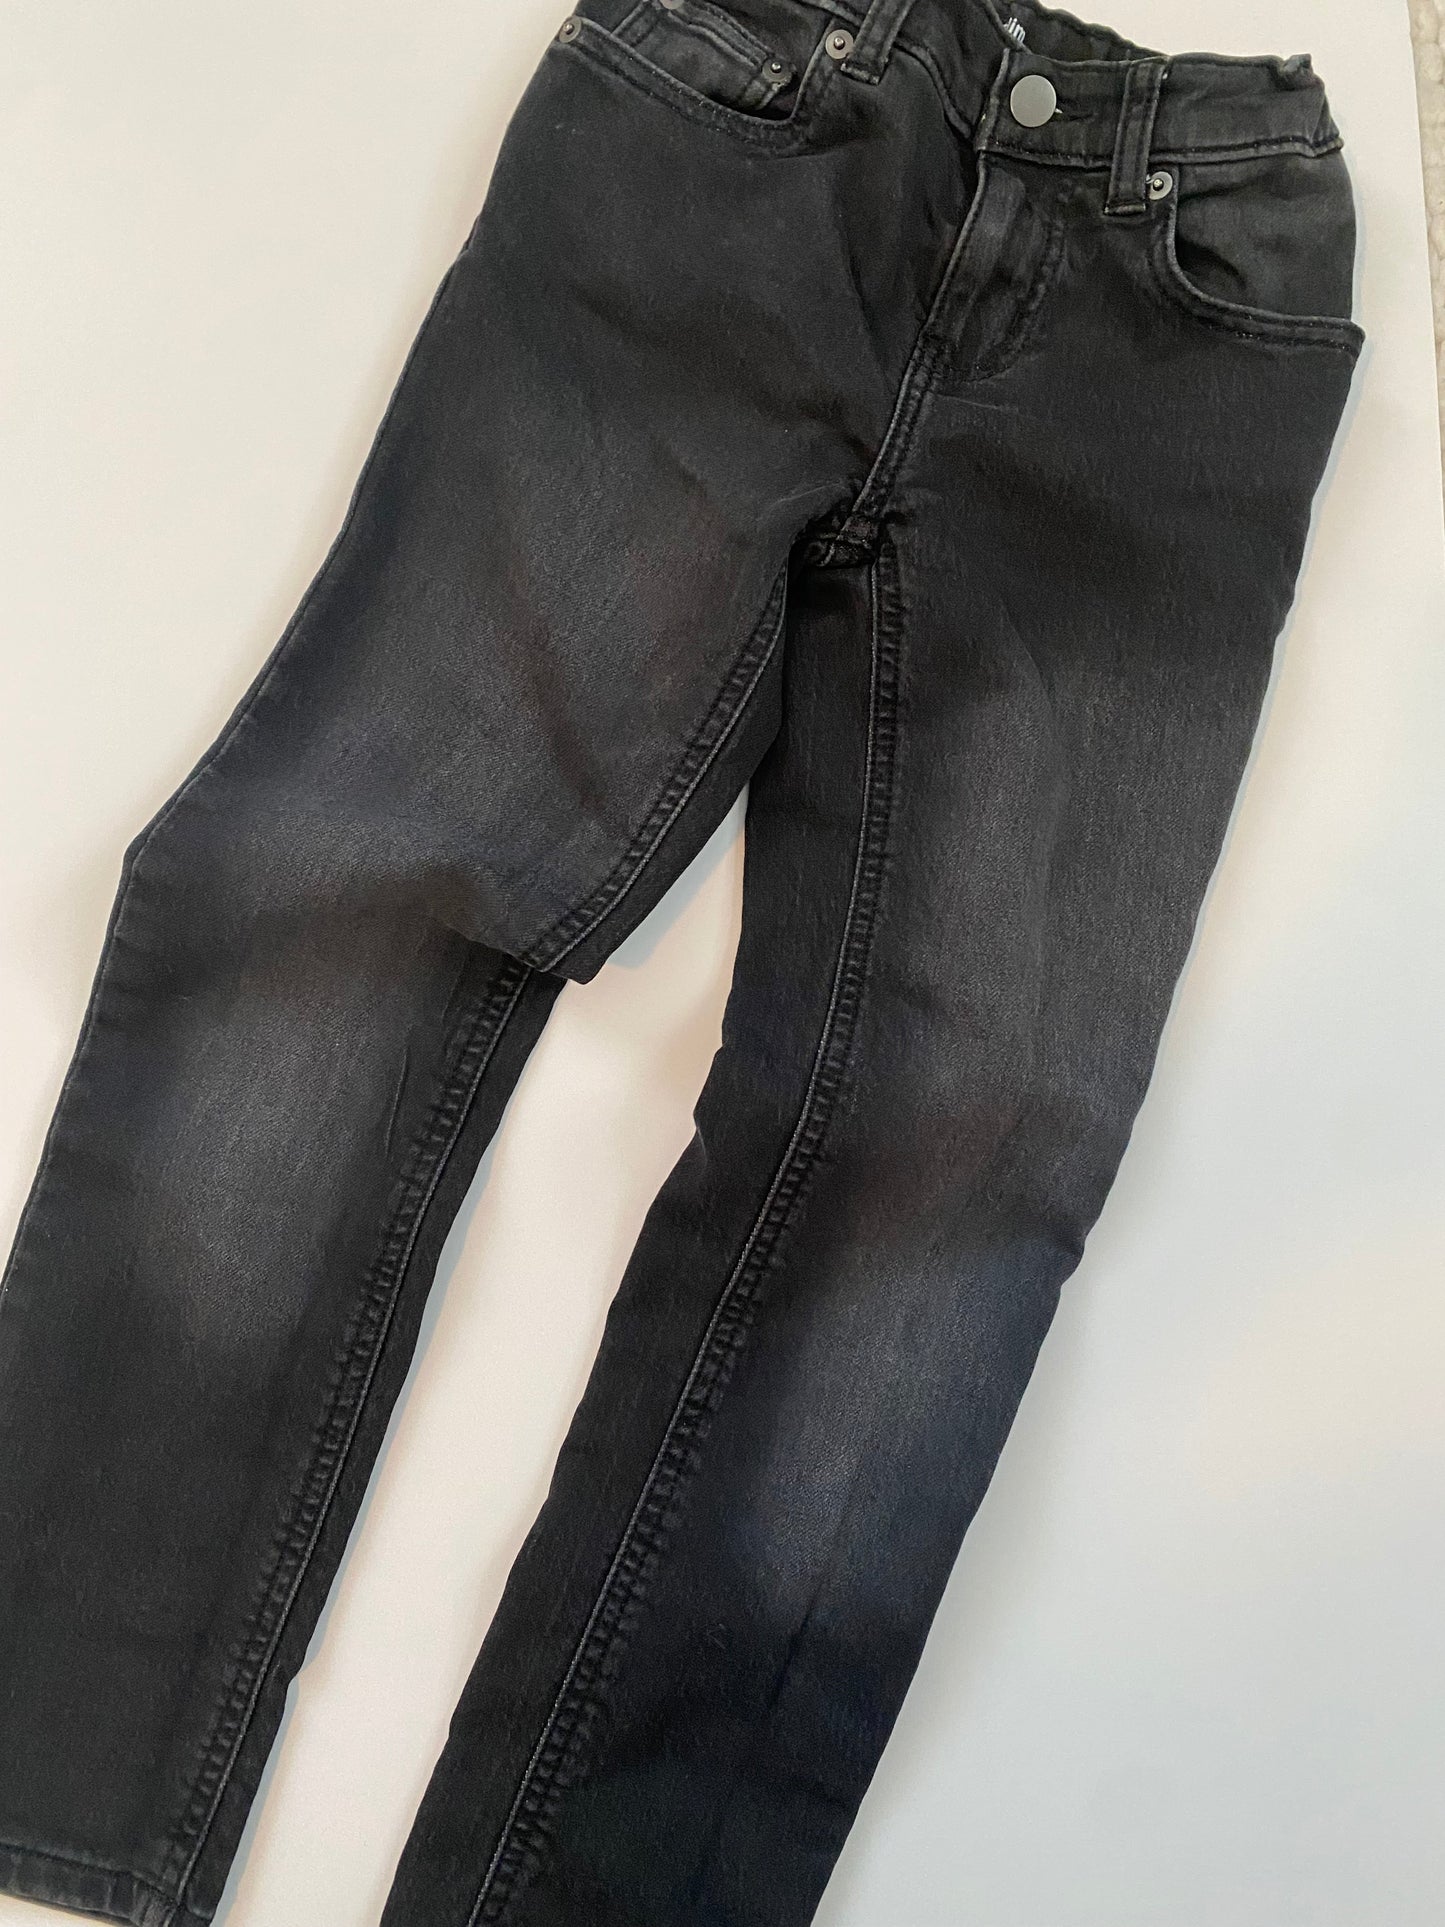 Black slim jeans size 8 PPU Mariemont